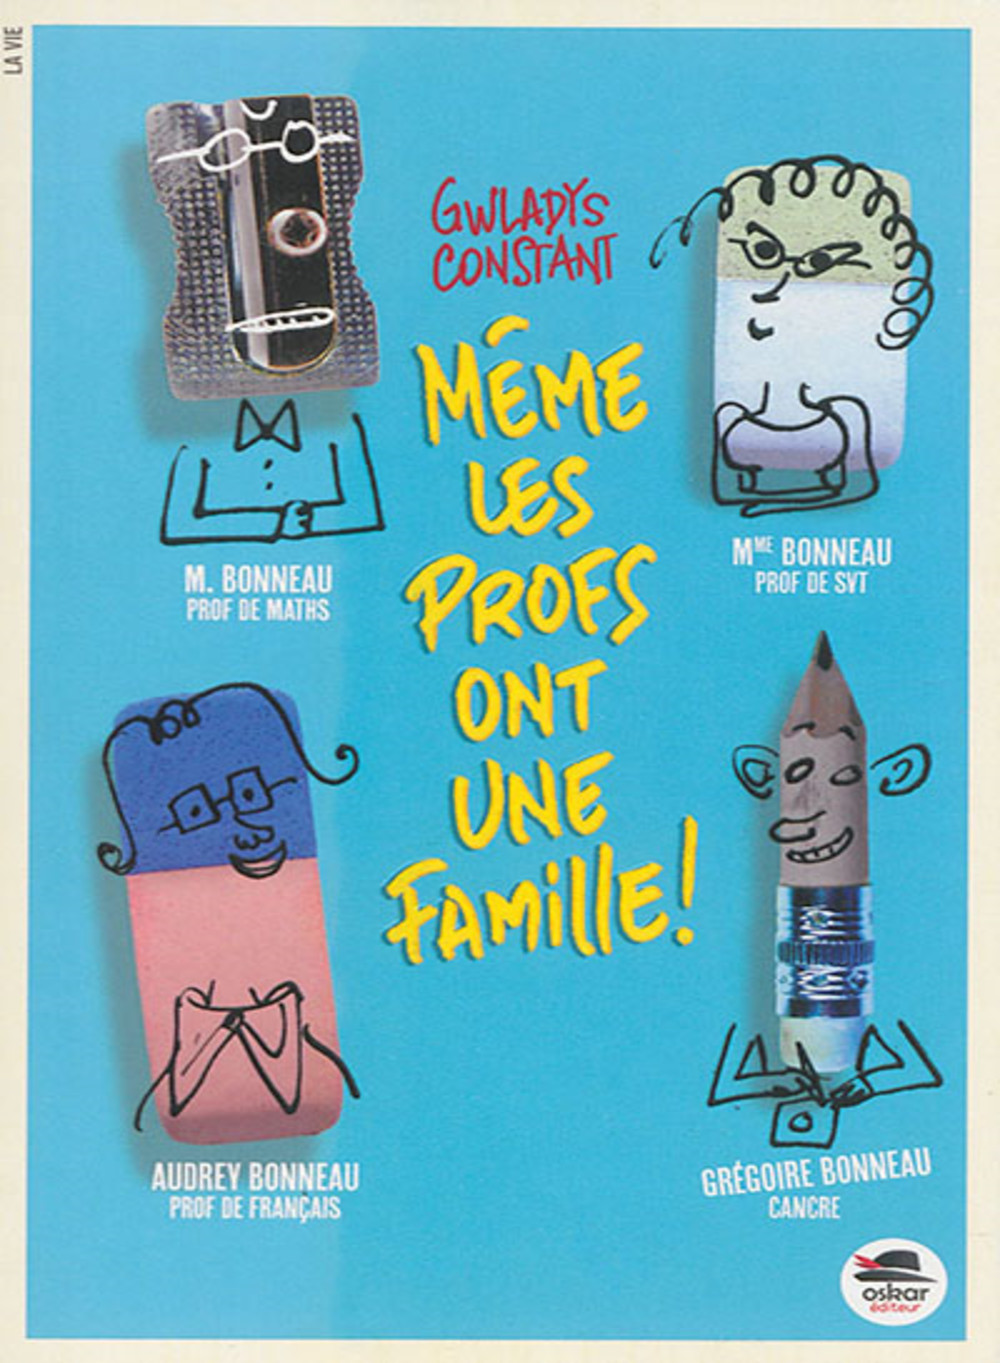 Meme_les_profs_ont_une_famille.jpg